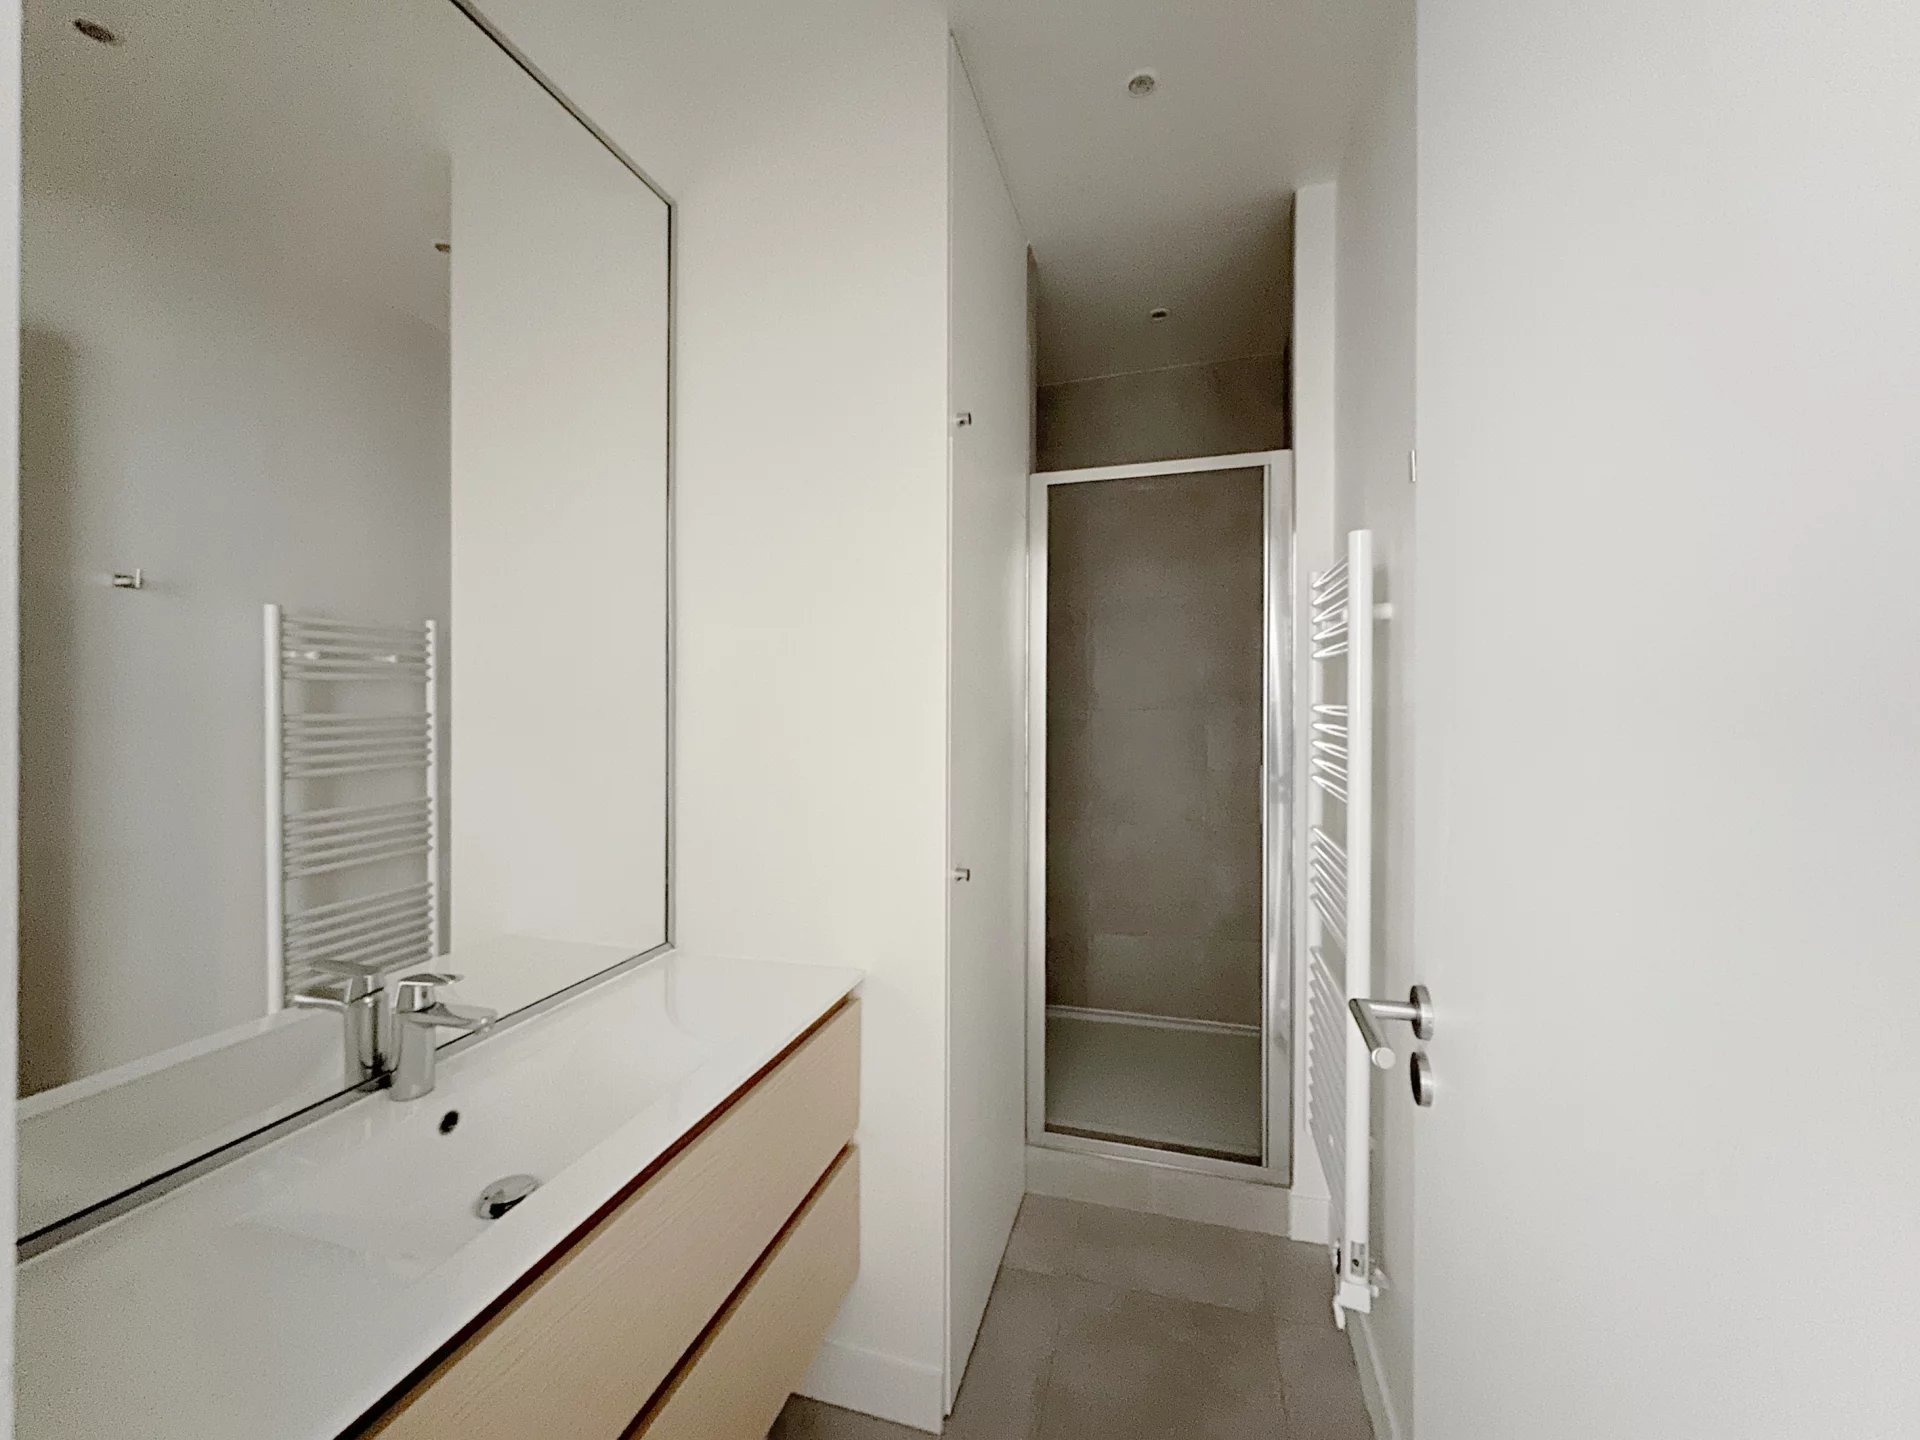 Appartement a louer neuilly-sur-seine - 1 pièce(s) - 35.8 m2 - Surfyn